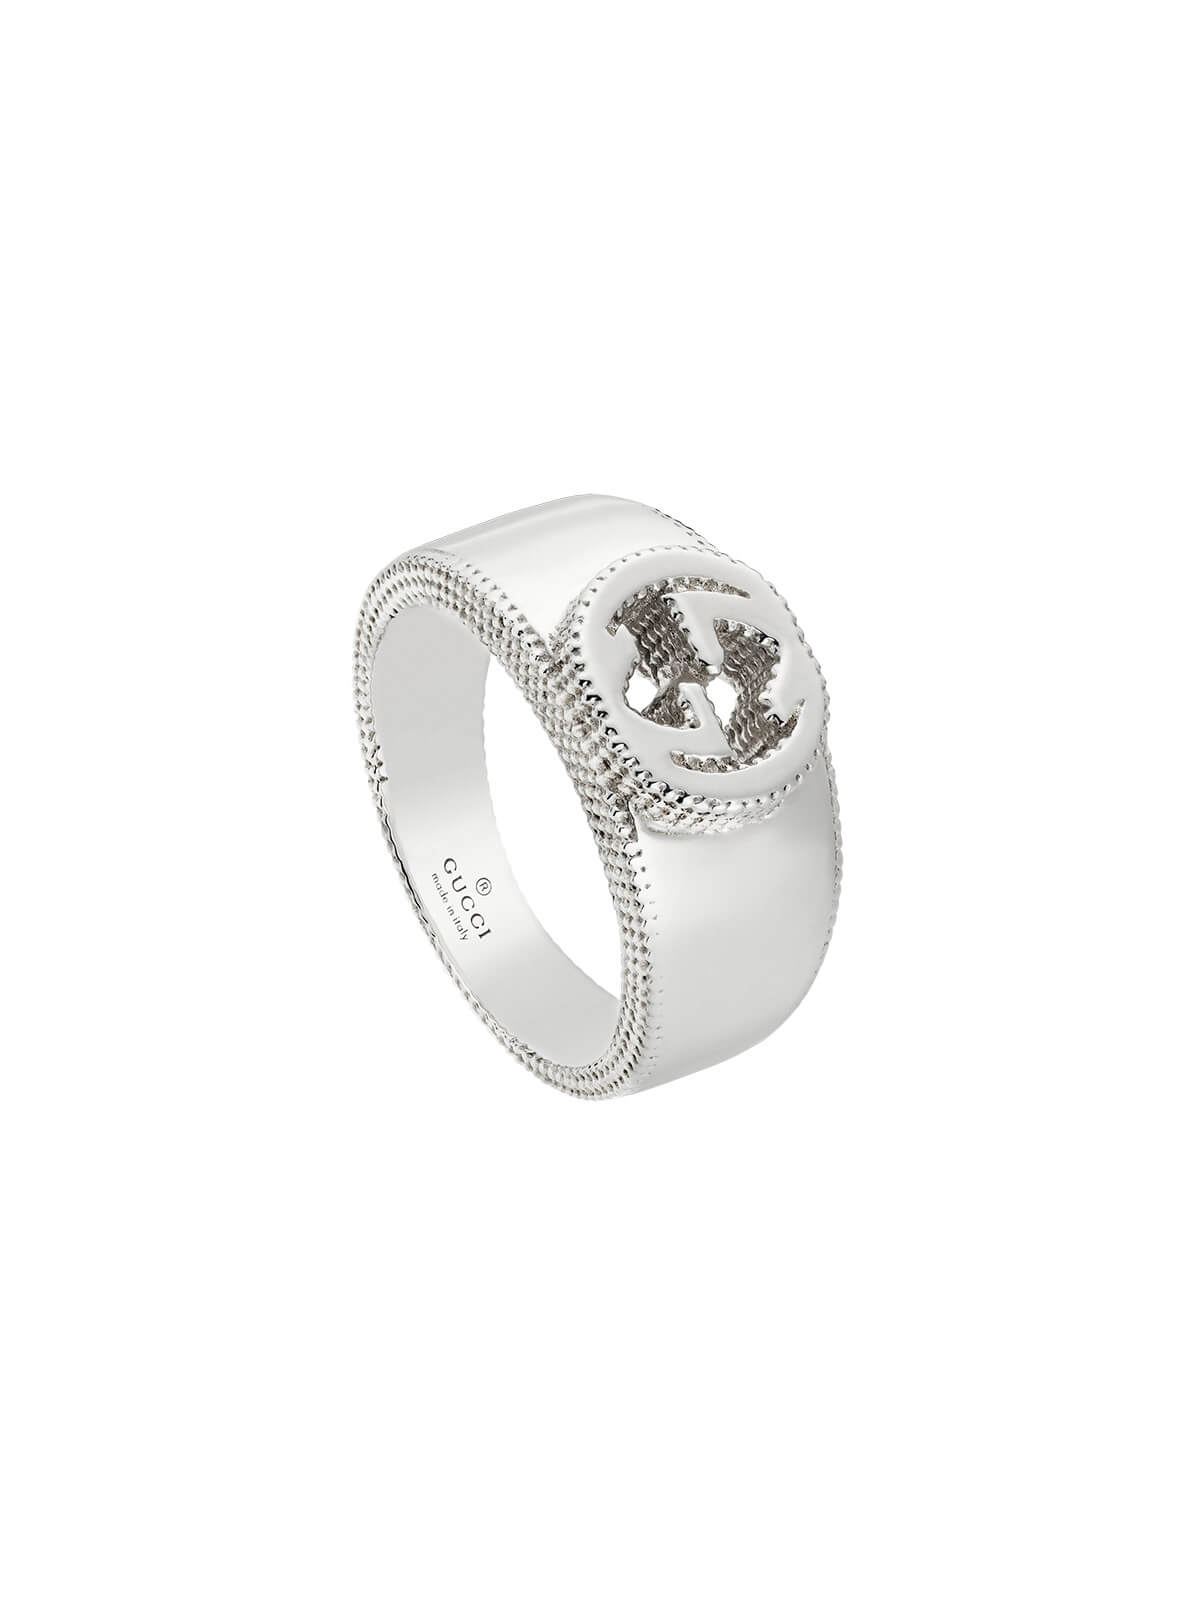 Gucci Interlocking G Ring in Silver - Size P YBC479228001016